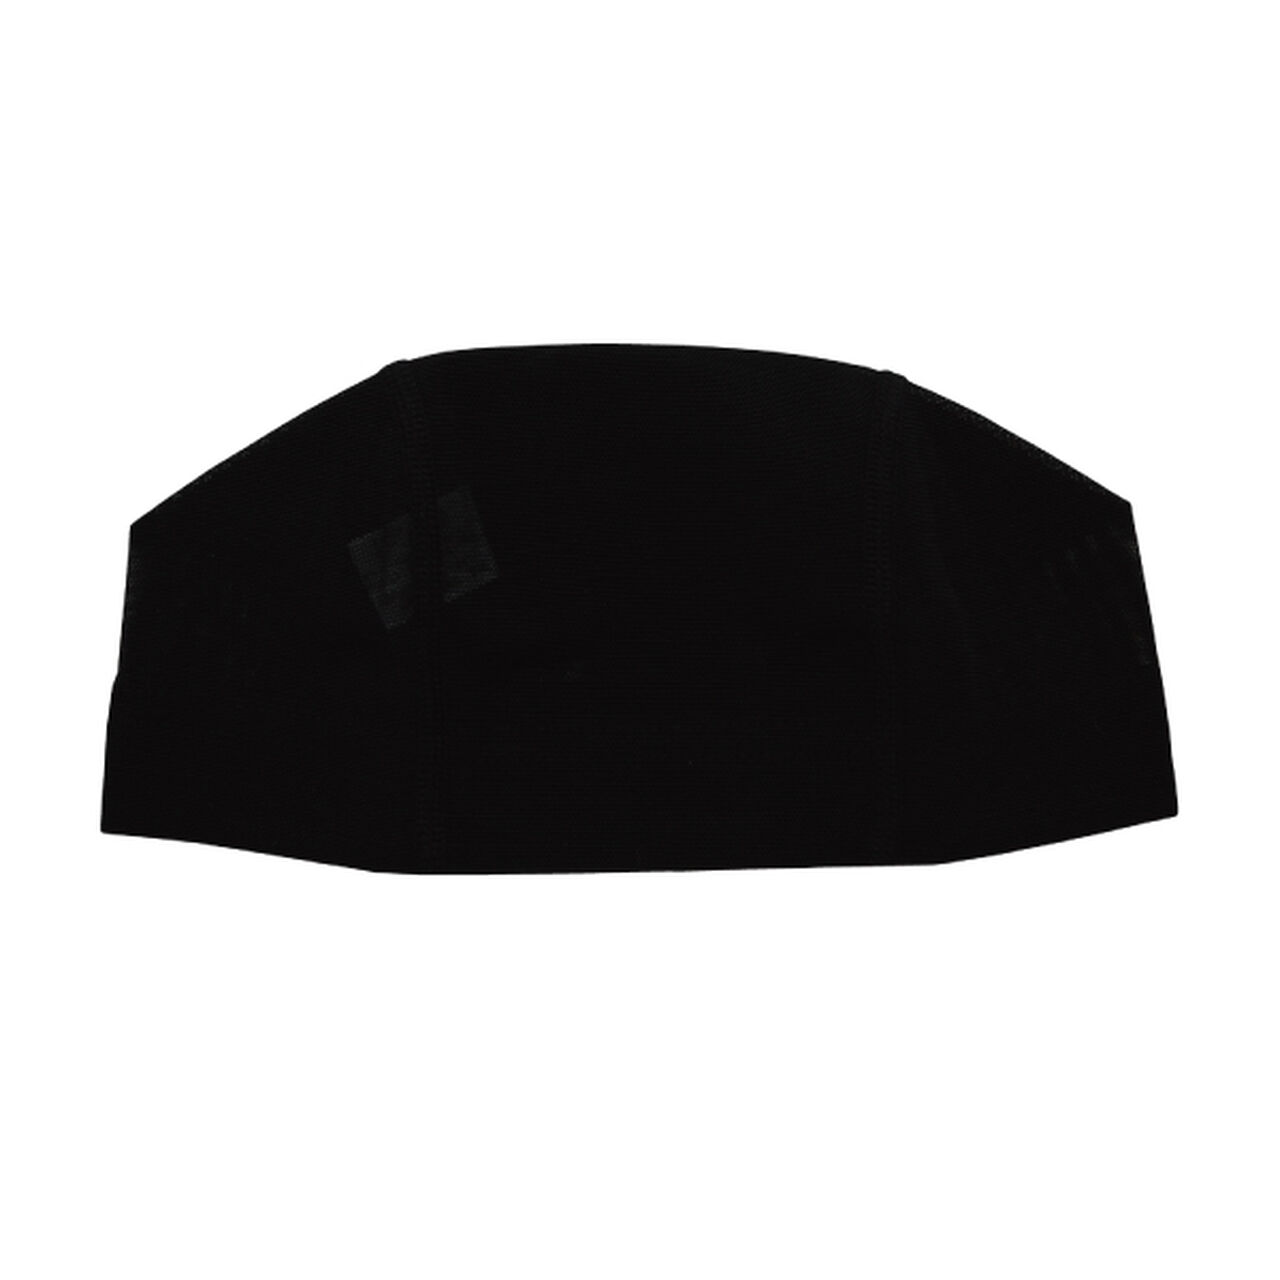 SA-61 L Black mesh swim cap L size,Opt9, large image number 0